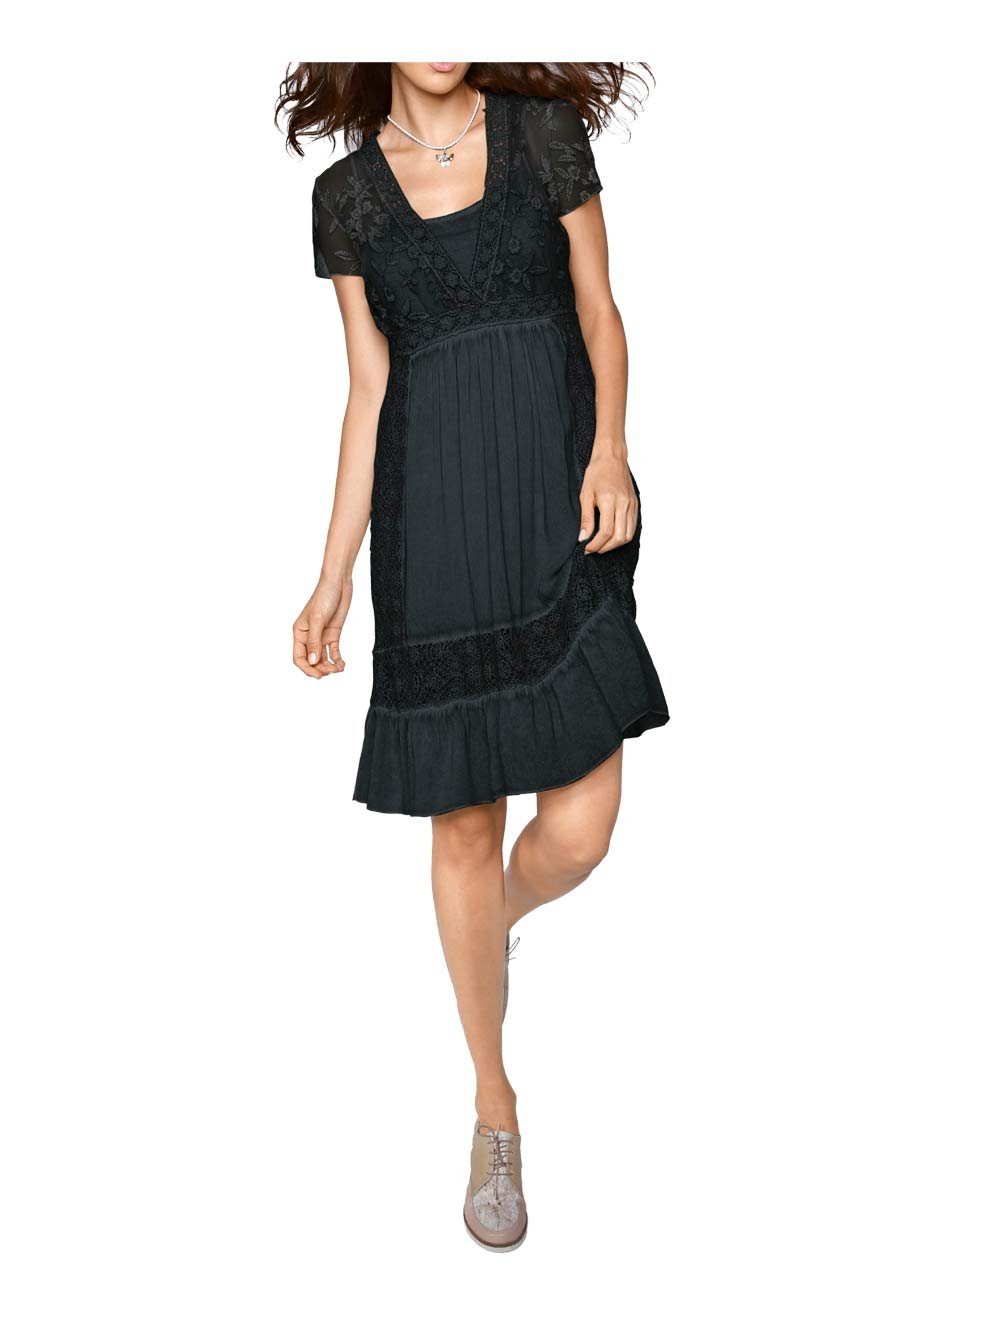 Damen heine schwarz Tesini Linea Designer-Spitzenkleid, Spitzenkleid